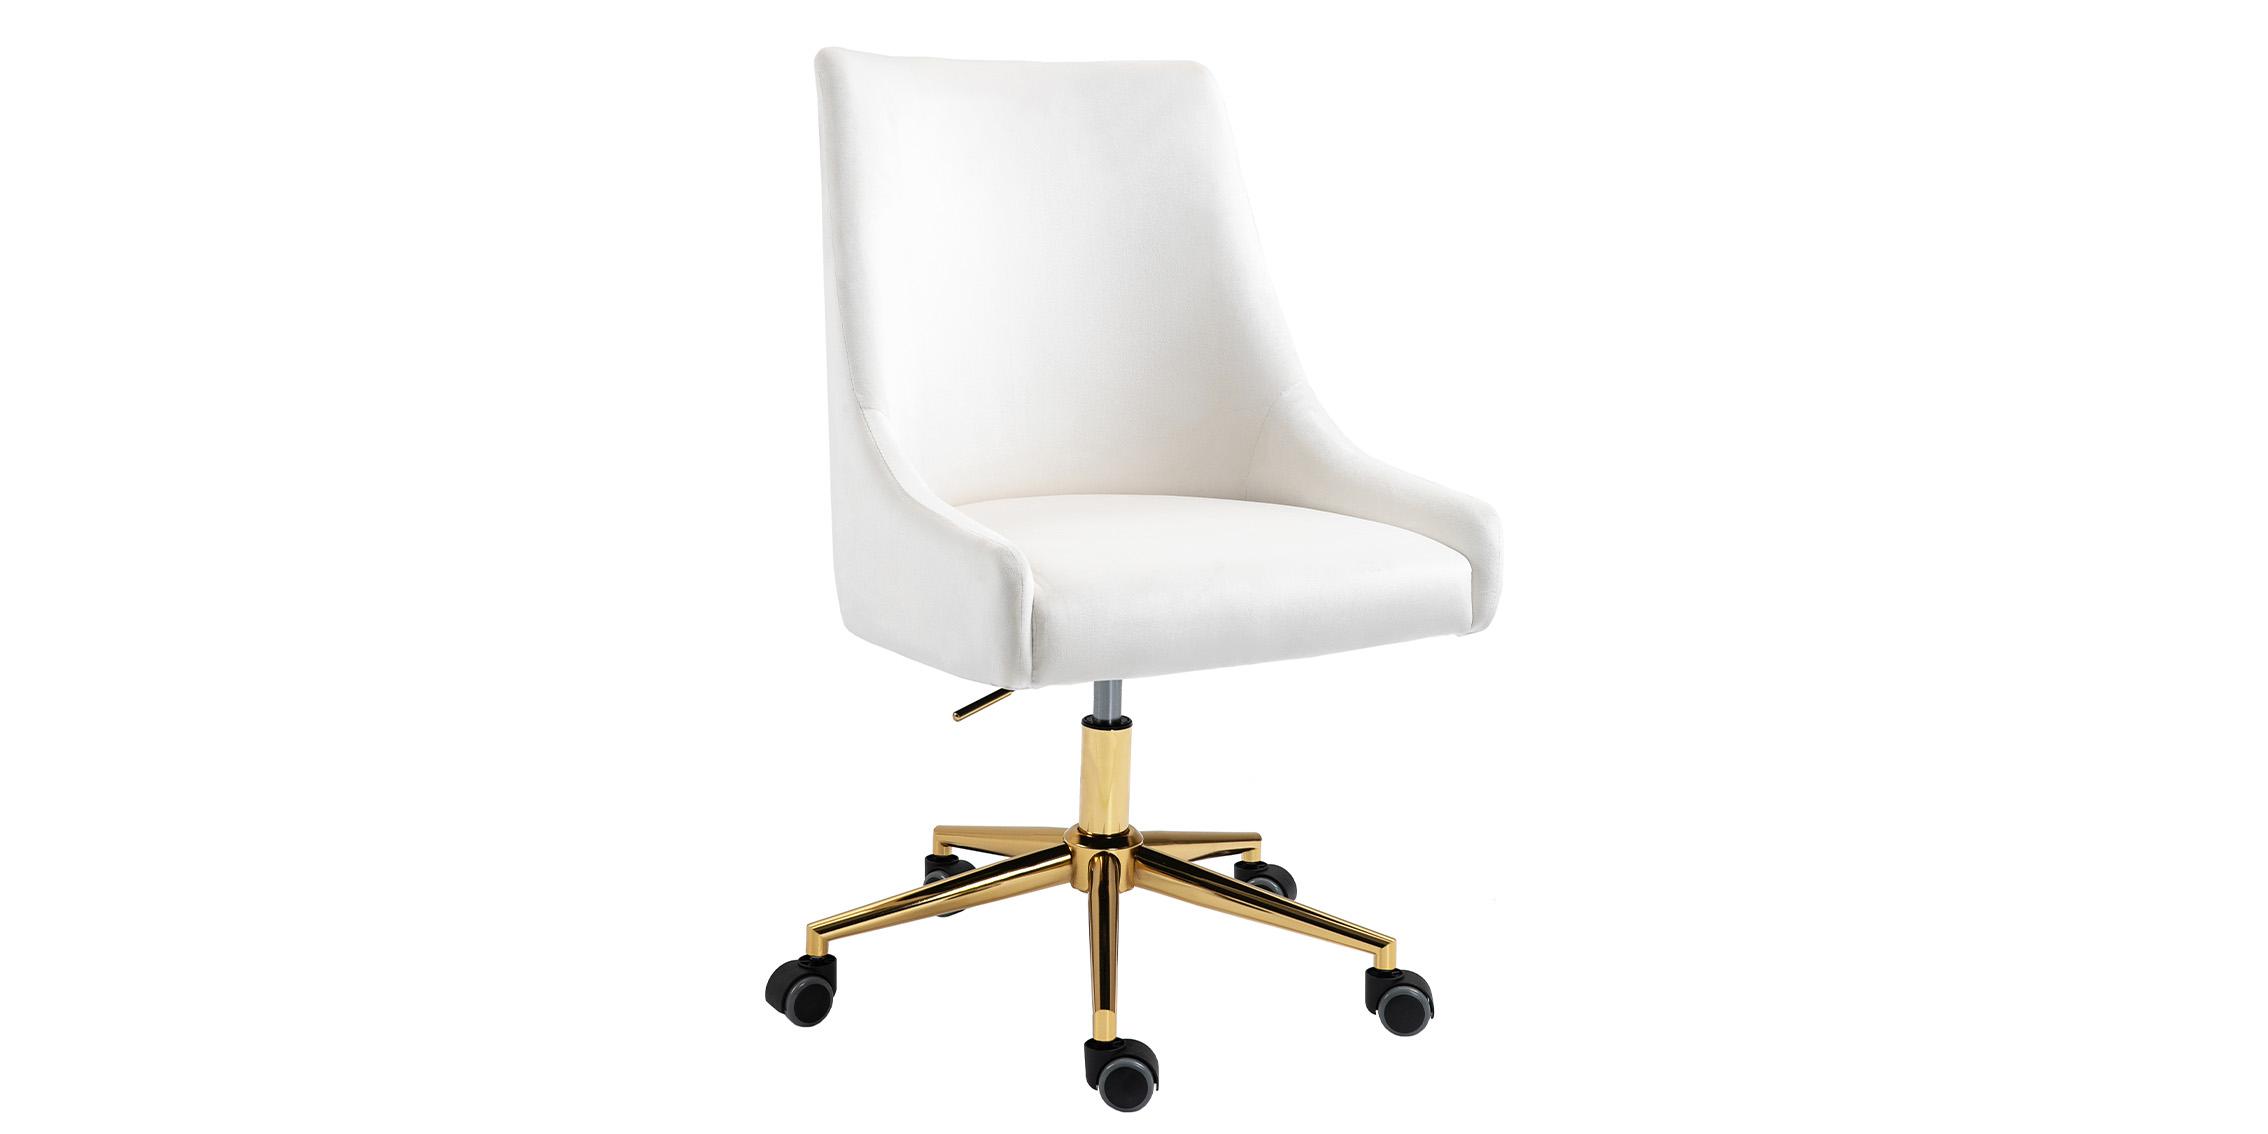 Contemporary, Modern Office Chair KARINA 163Cream 163Cream in Cream, Gold Fabric